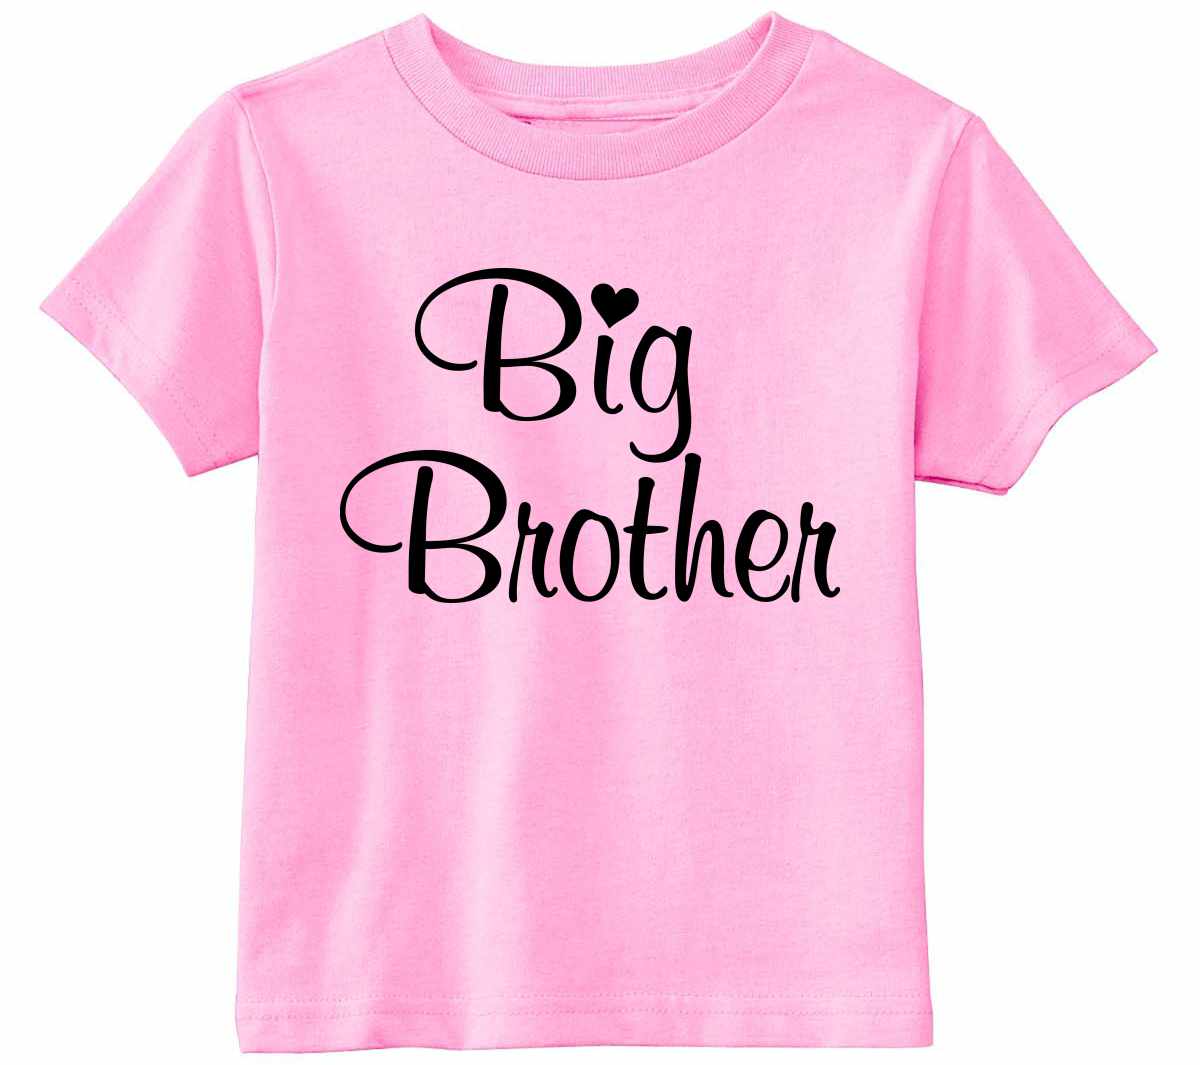 Big Brother on Infant-Toddler T-Shirt (#1344-7)